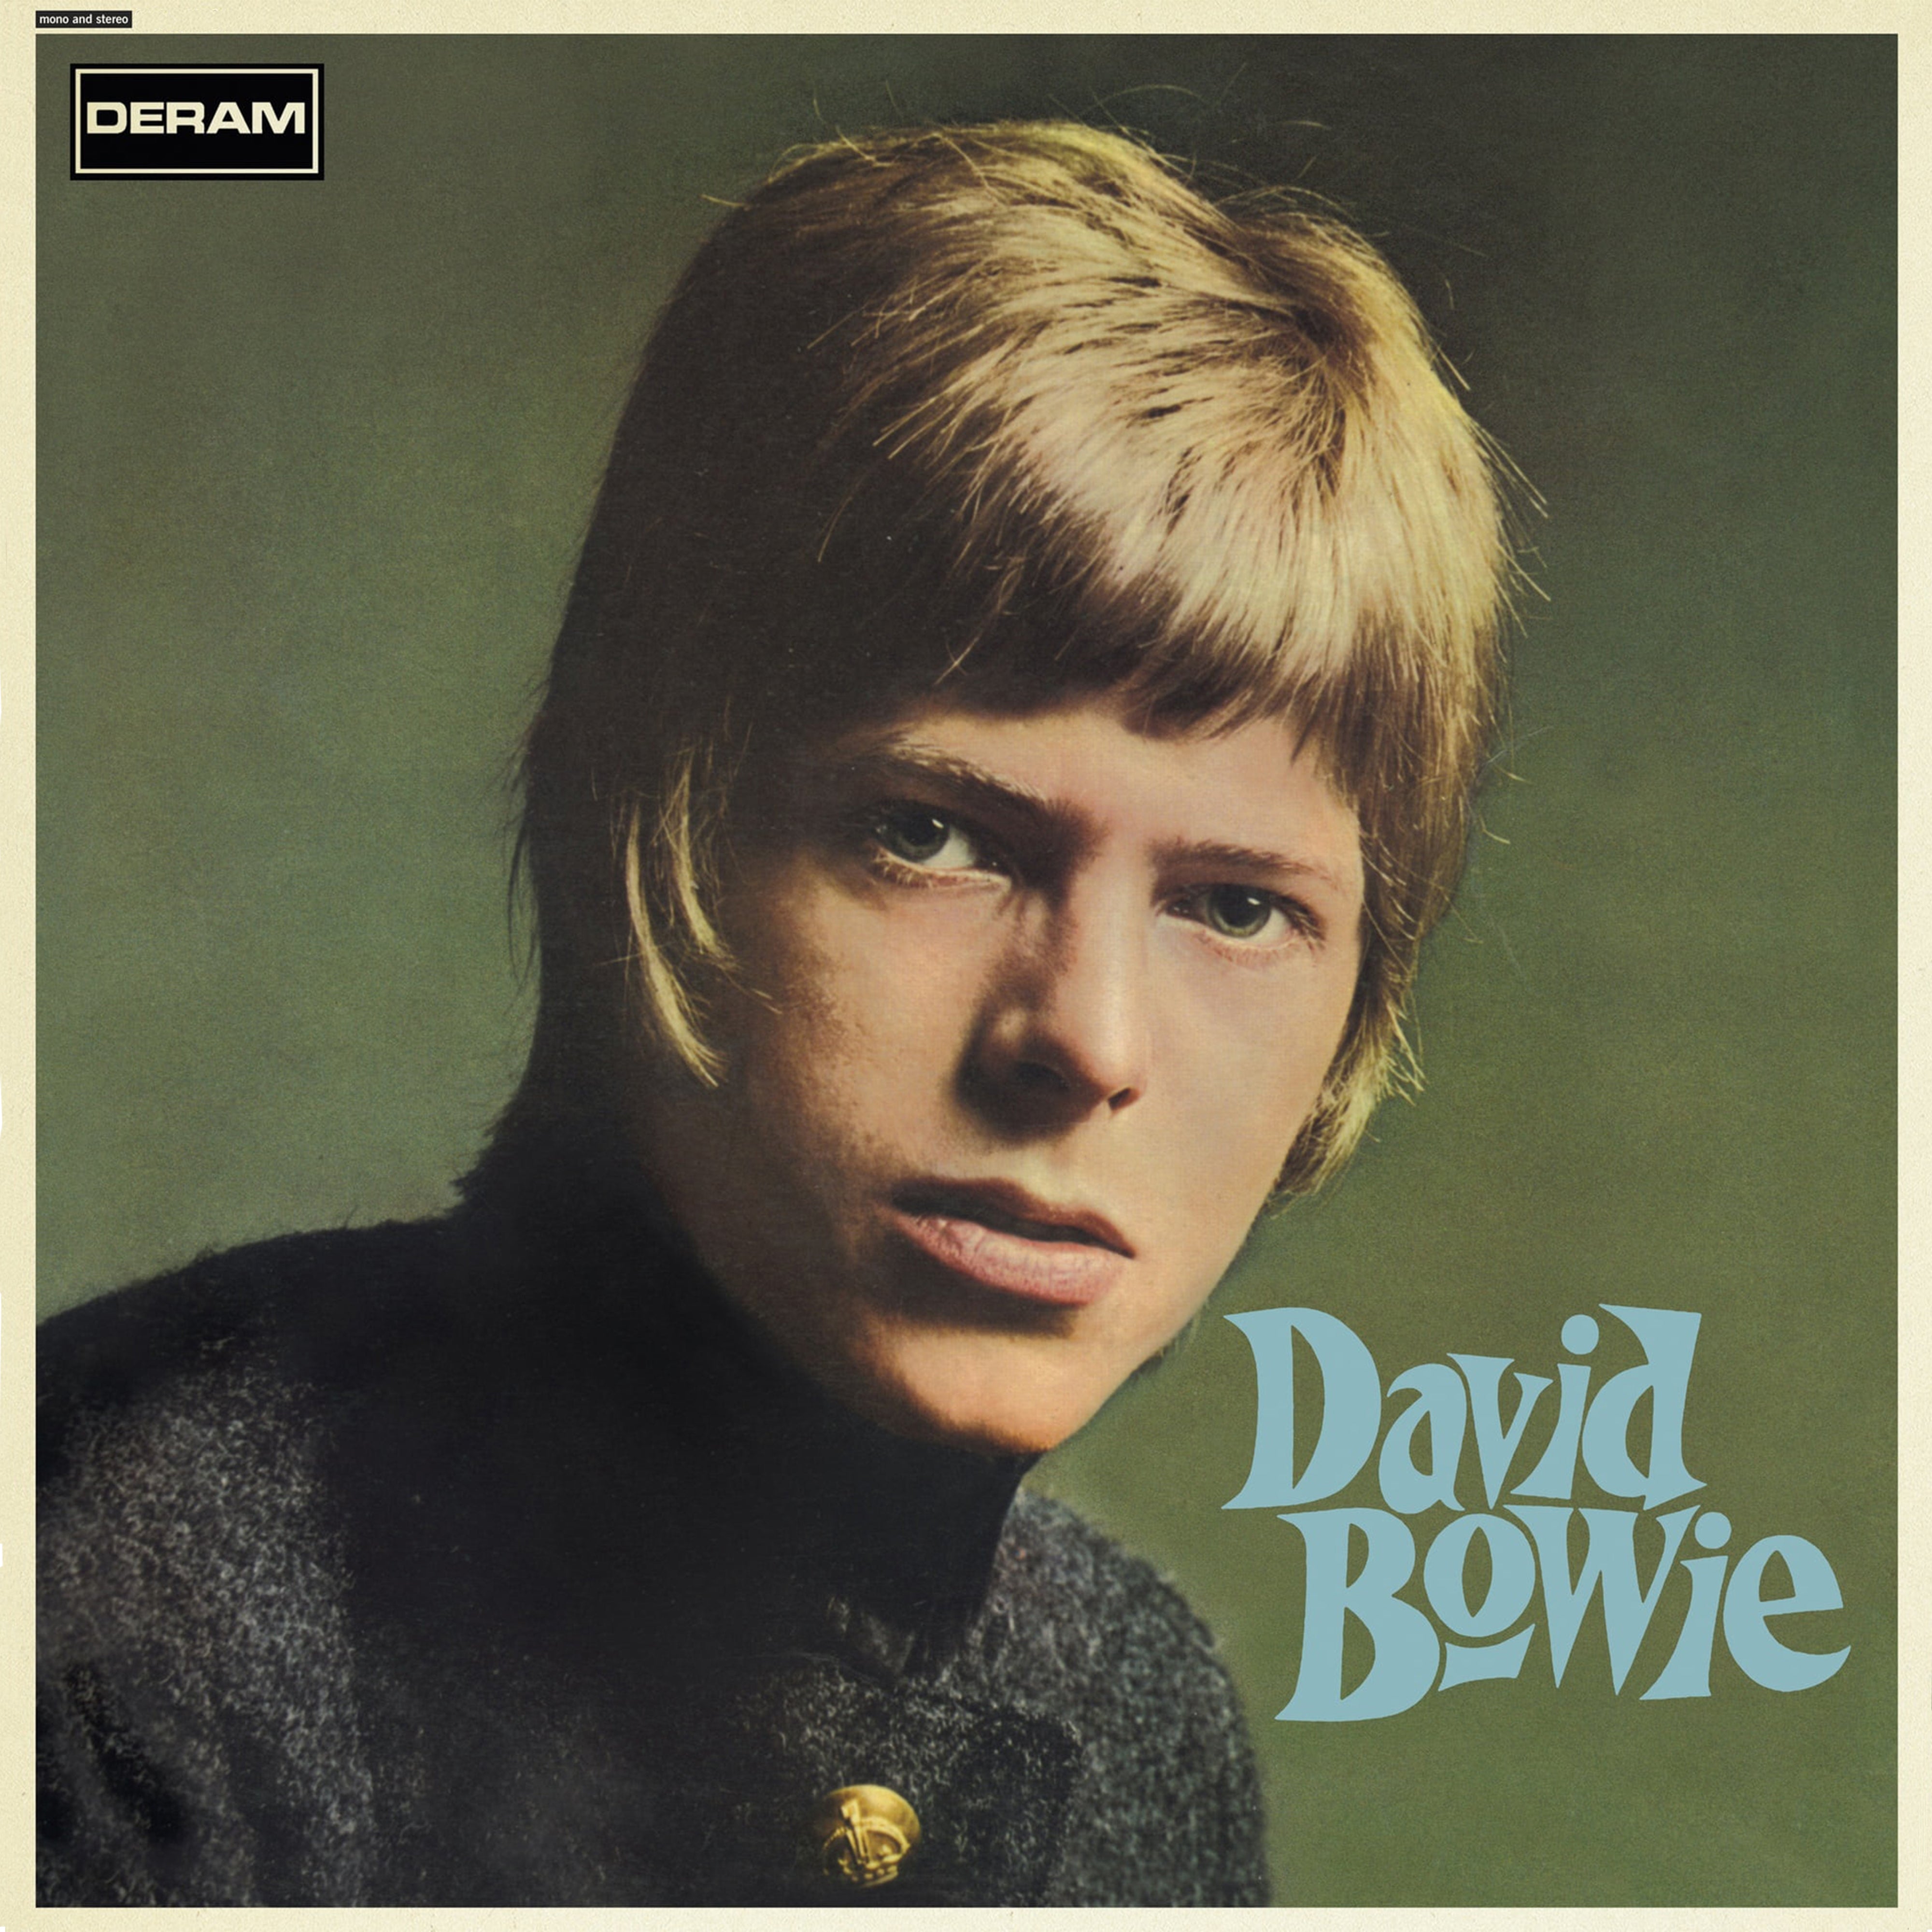 David Bowie - David Bowie: Deluxe Edition [2CD] - Decca Records